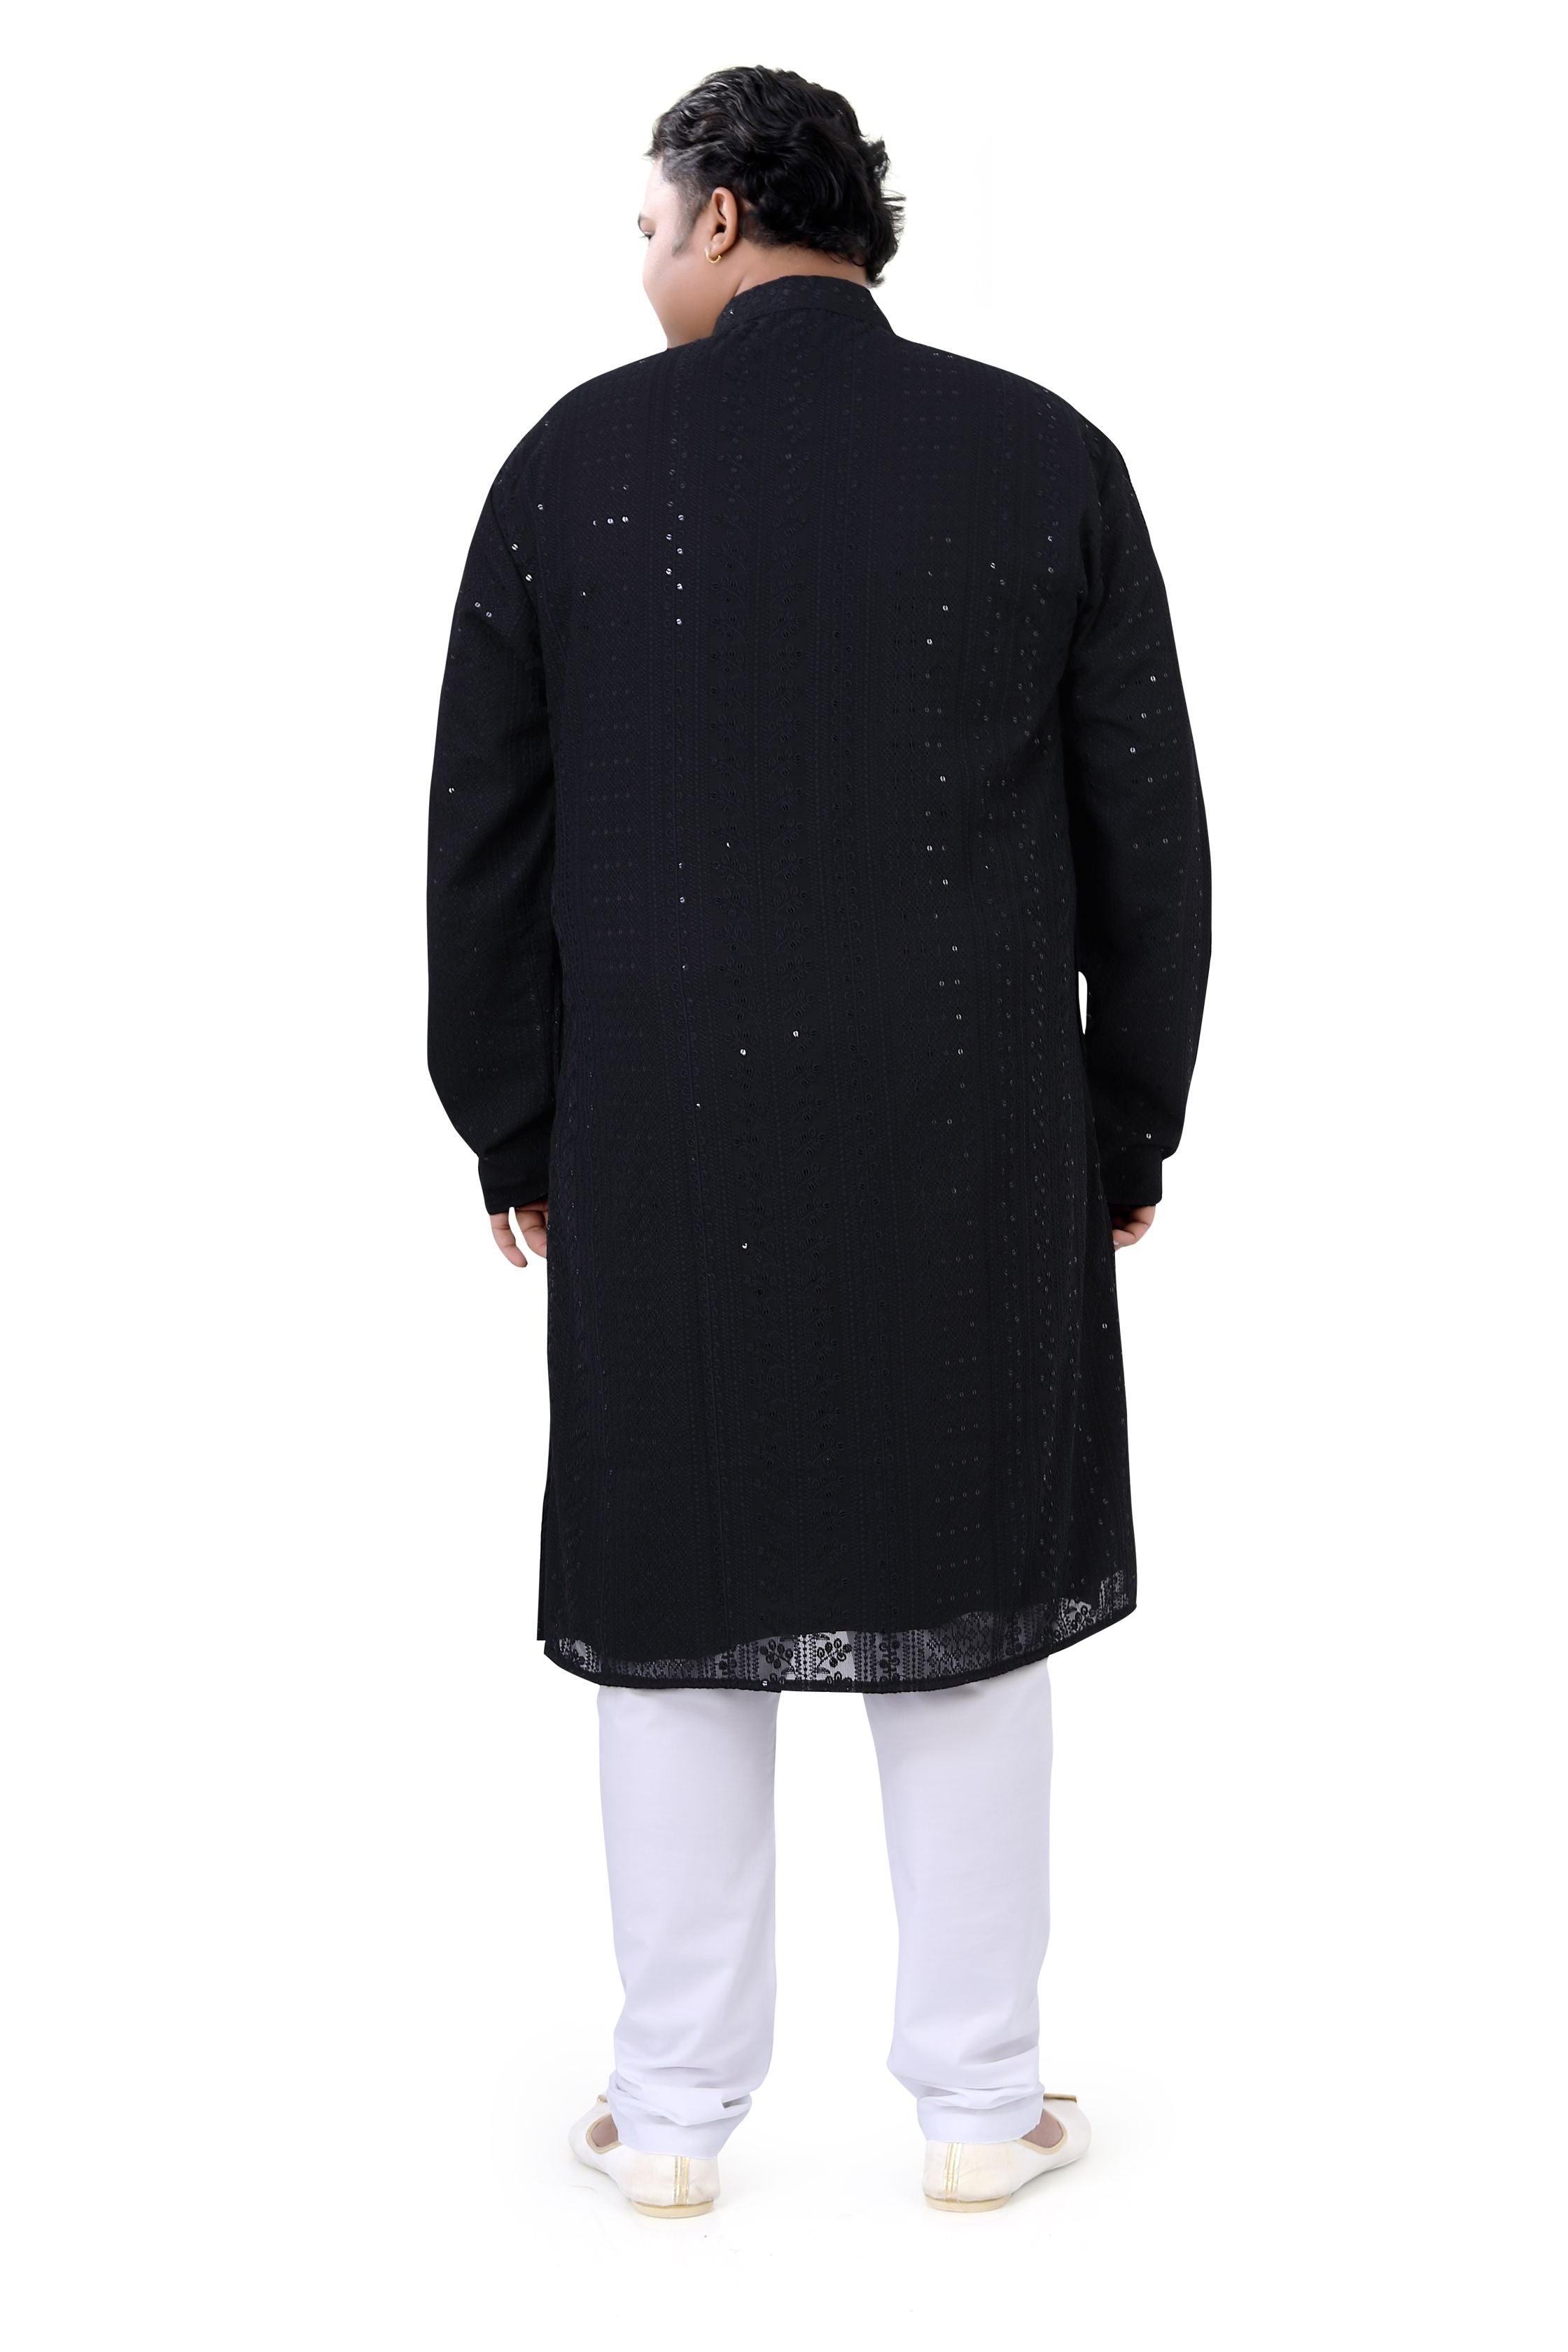 Plus Size Lucknowi Kurta set in Black color - Premium kurta pajama from Dapper Ethnic - Just $99! Shop now at Dulhan Exclusives